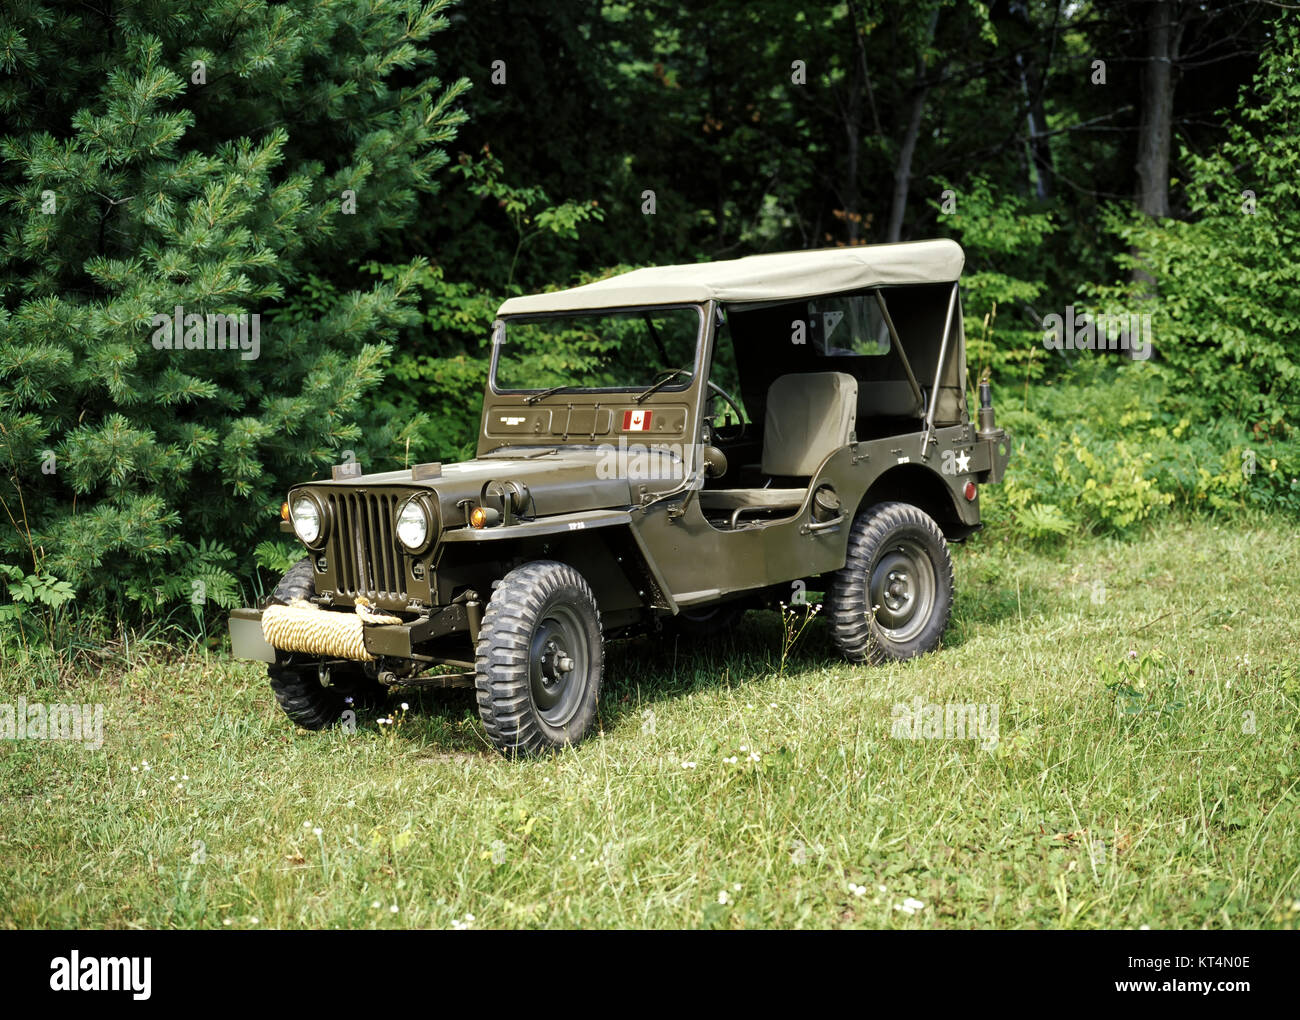 1952 Willys M38 Military Vehicle Stock Photo